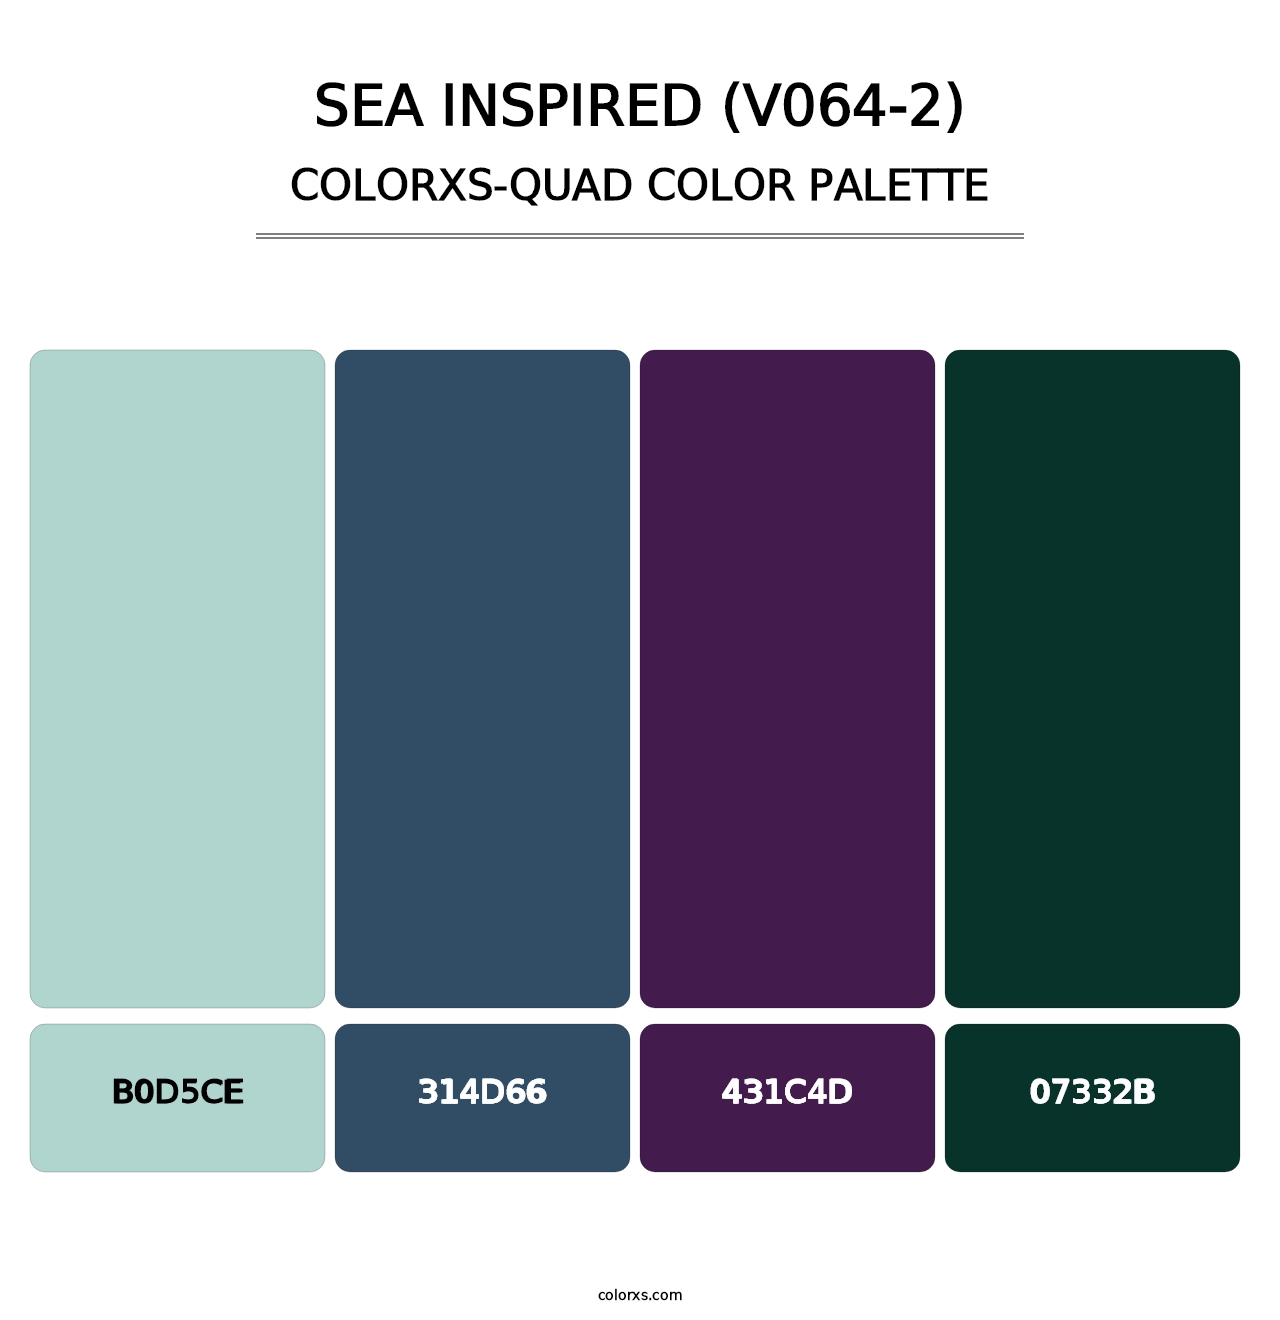 Sea Inspired (V064-2) - Colorxs Quad Palette